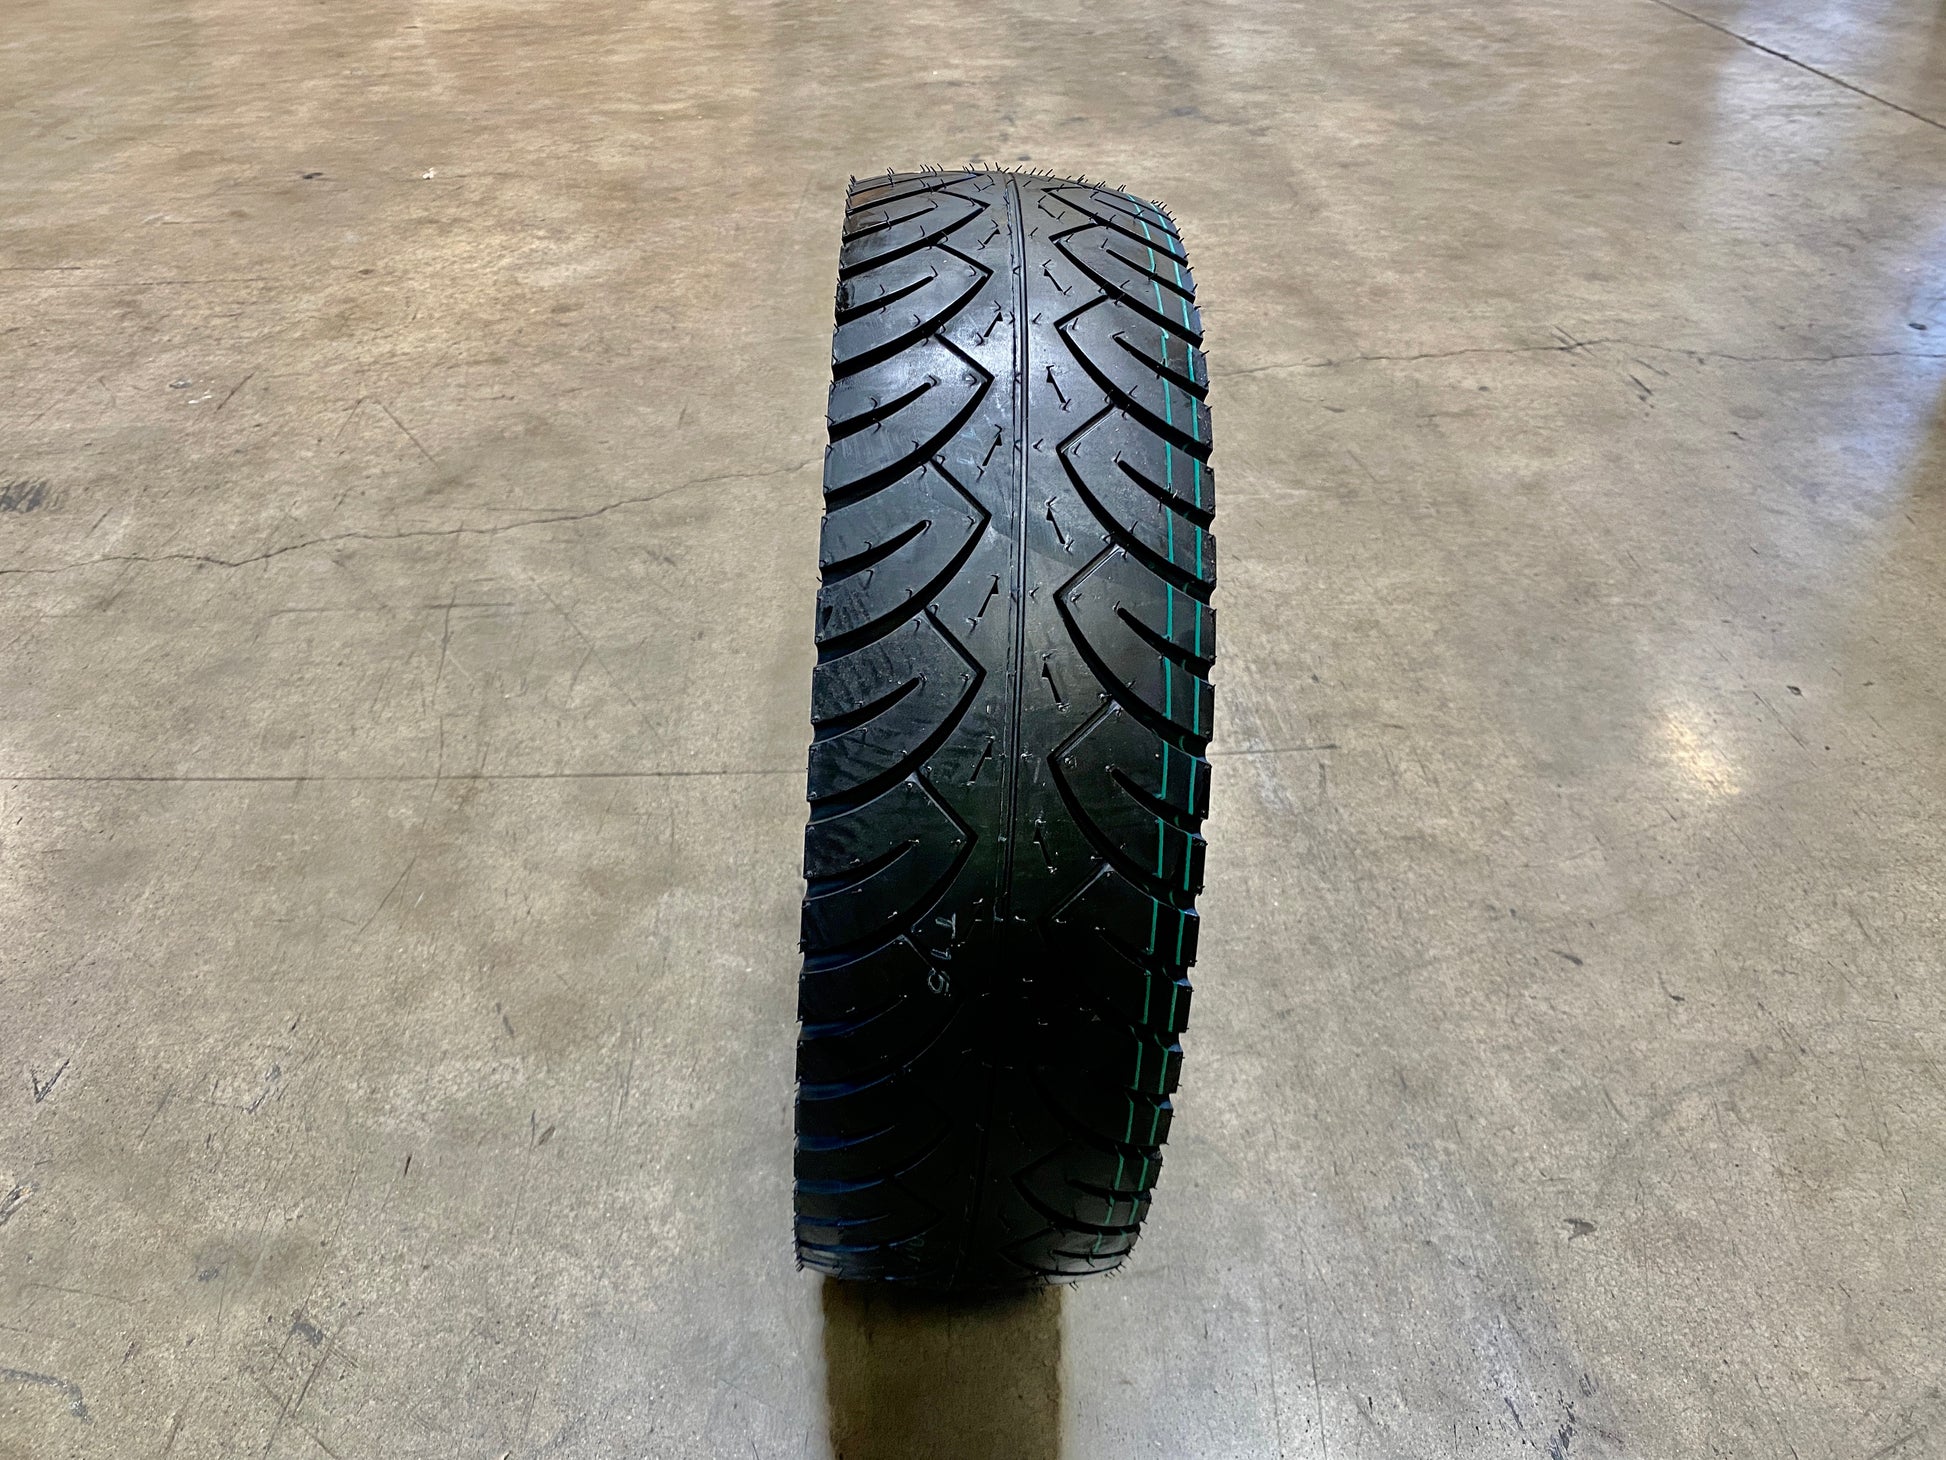 Venom X22R rear tire for sale. 140x60-17